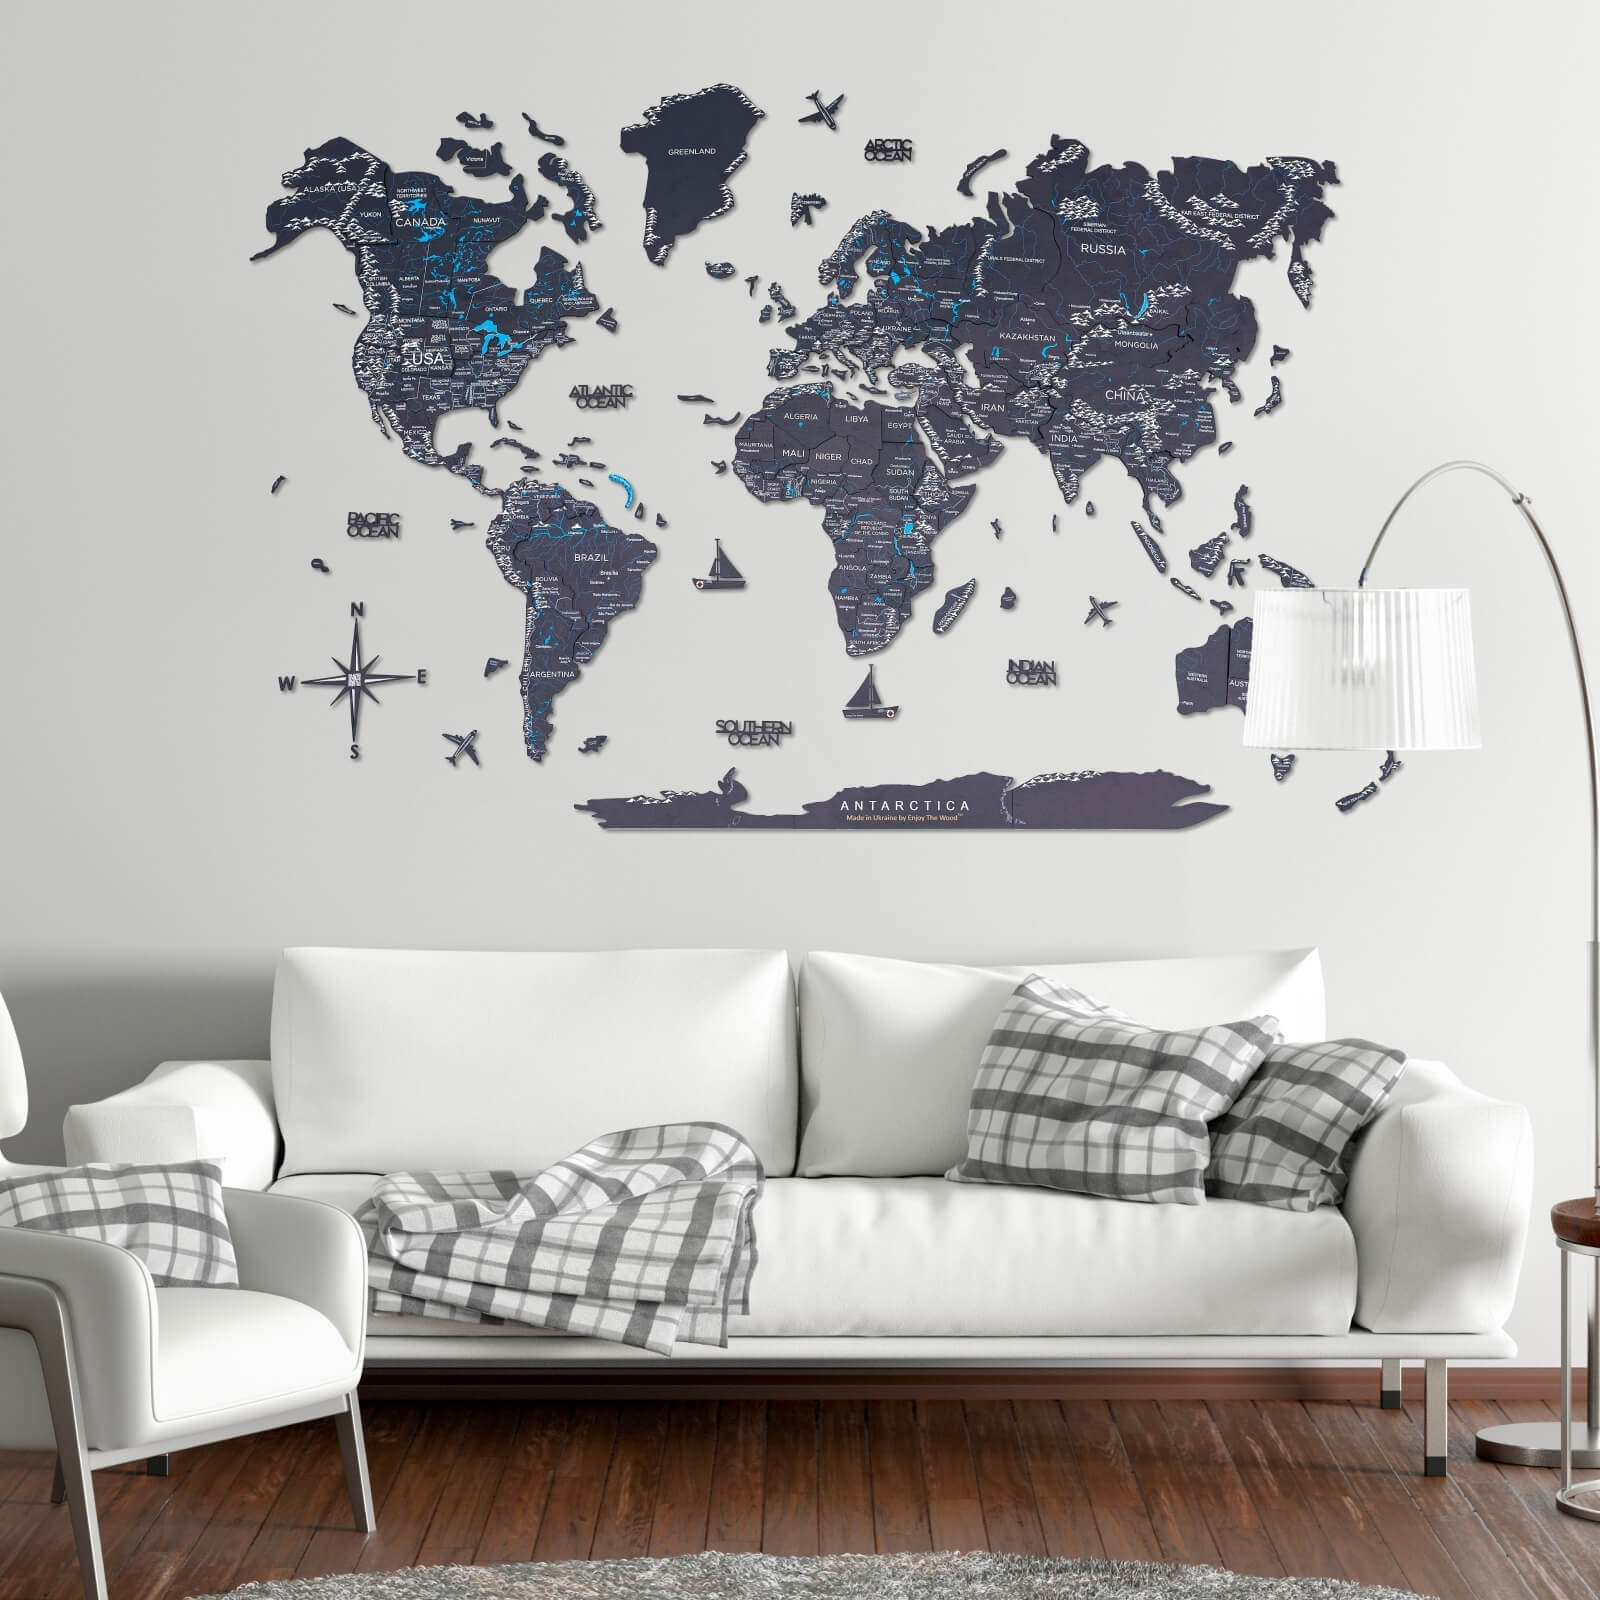 black world map